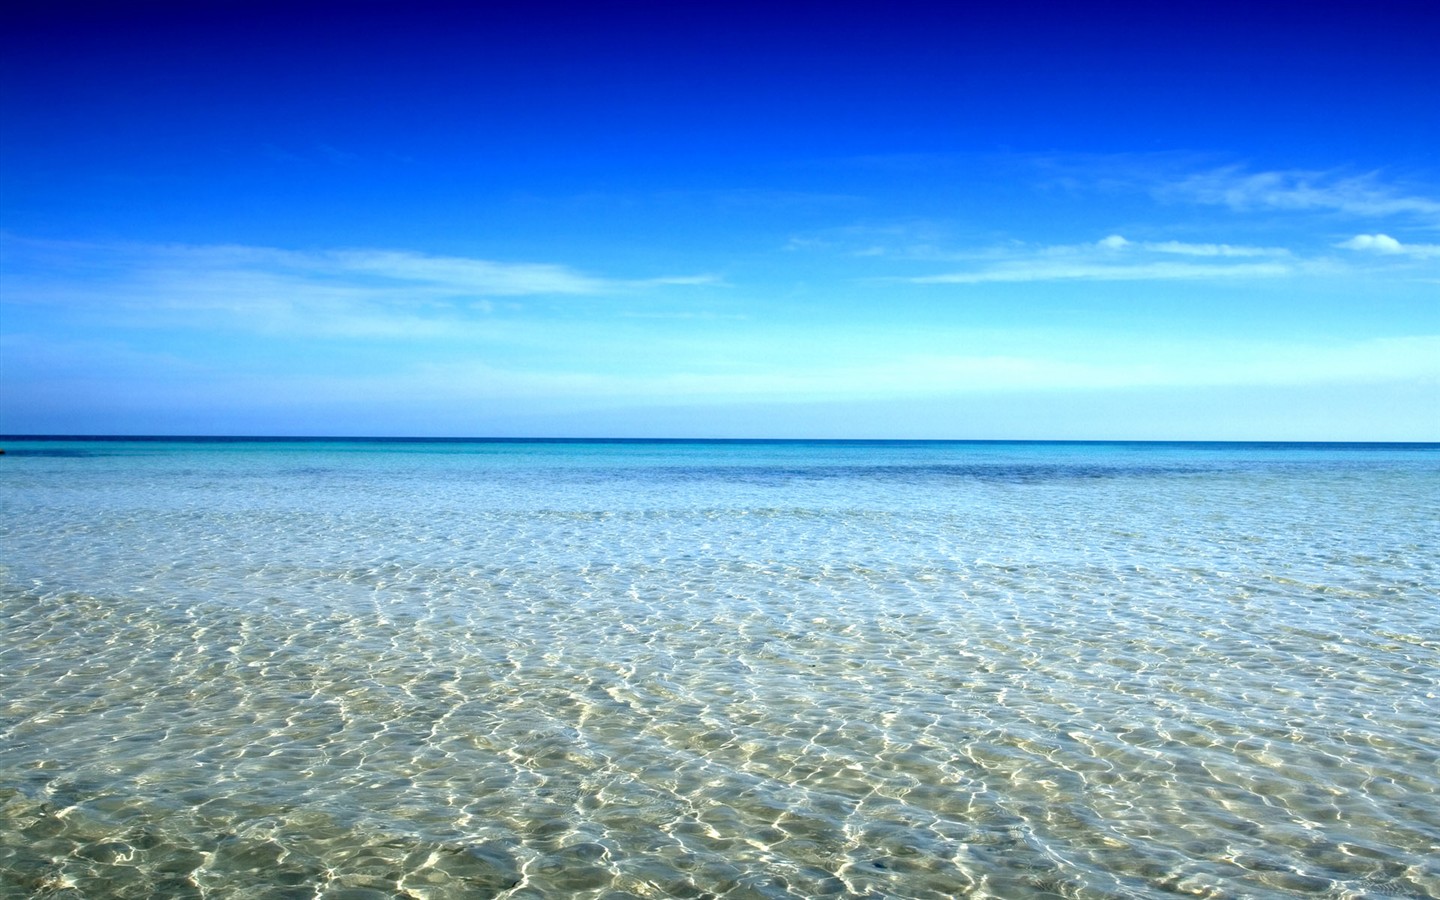 The beautiful seaside scenery HD Wallpapers #8 - 1440x900